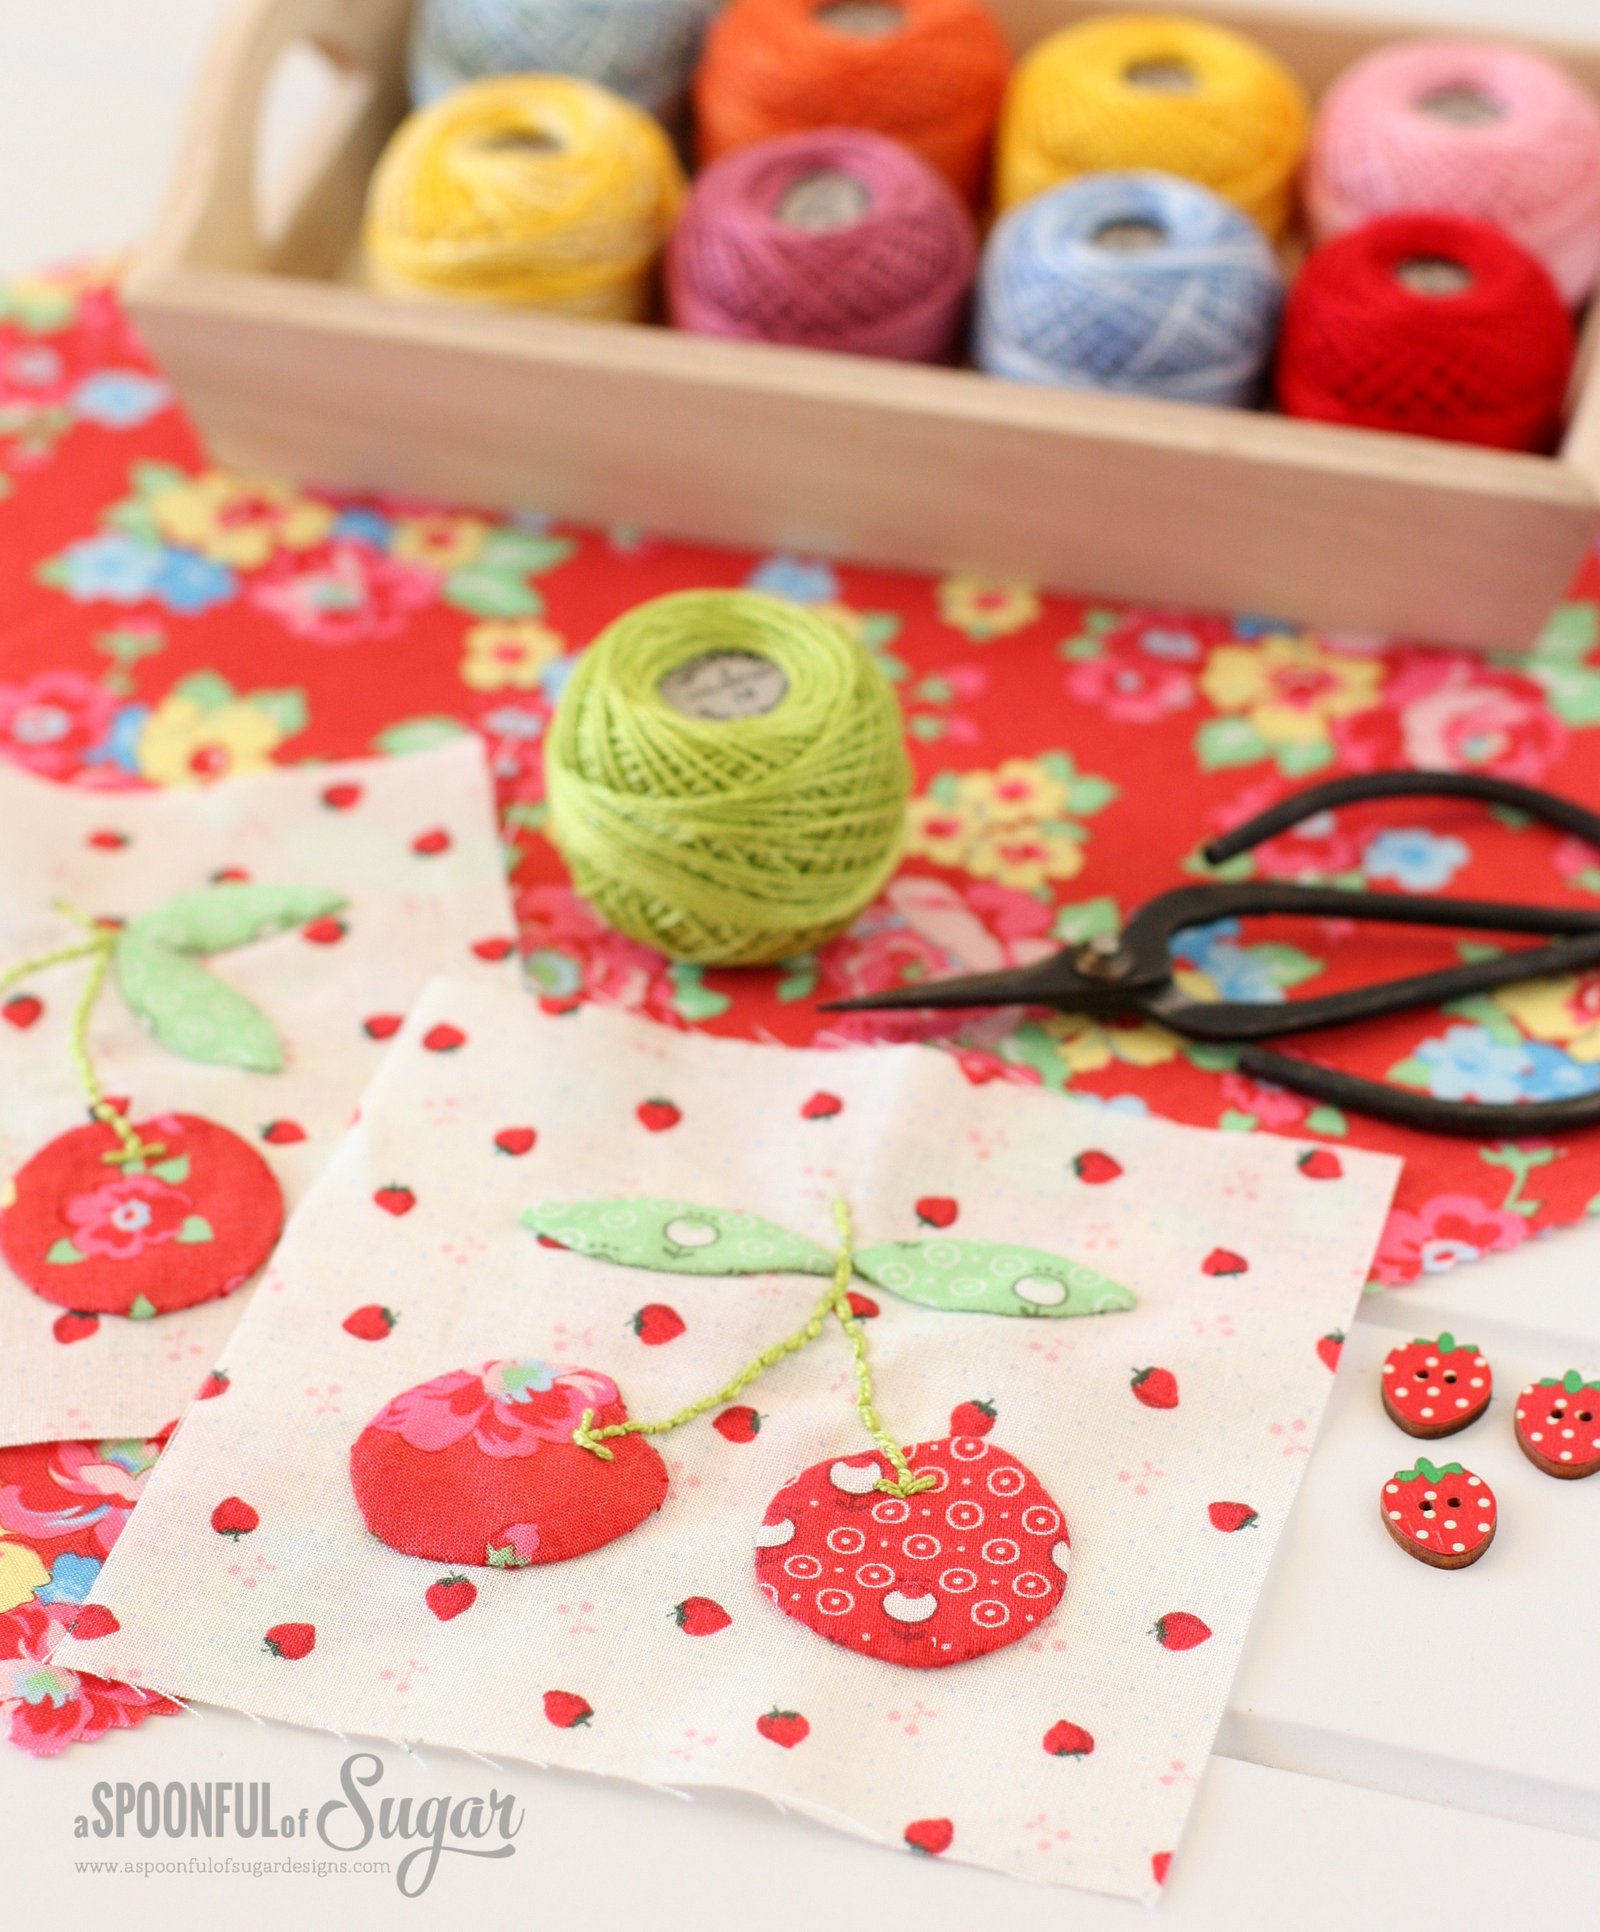 Happy Flower Quilts by Atsuko Matsuyma